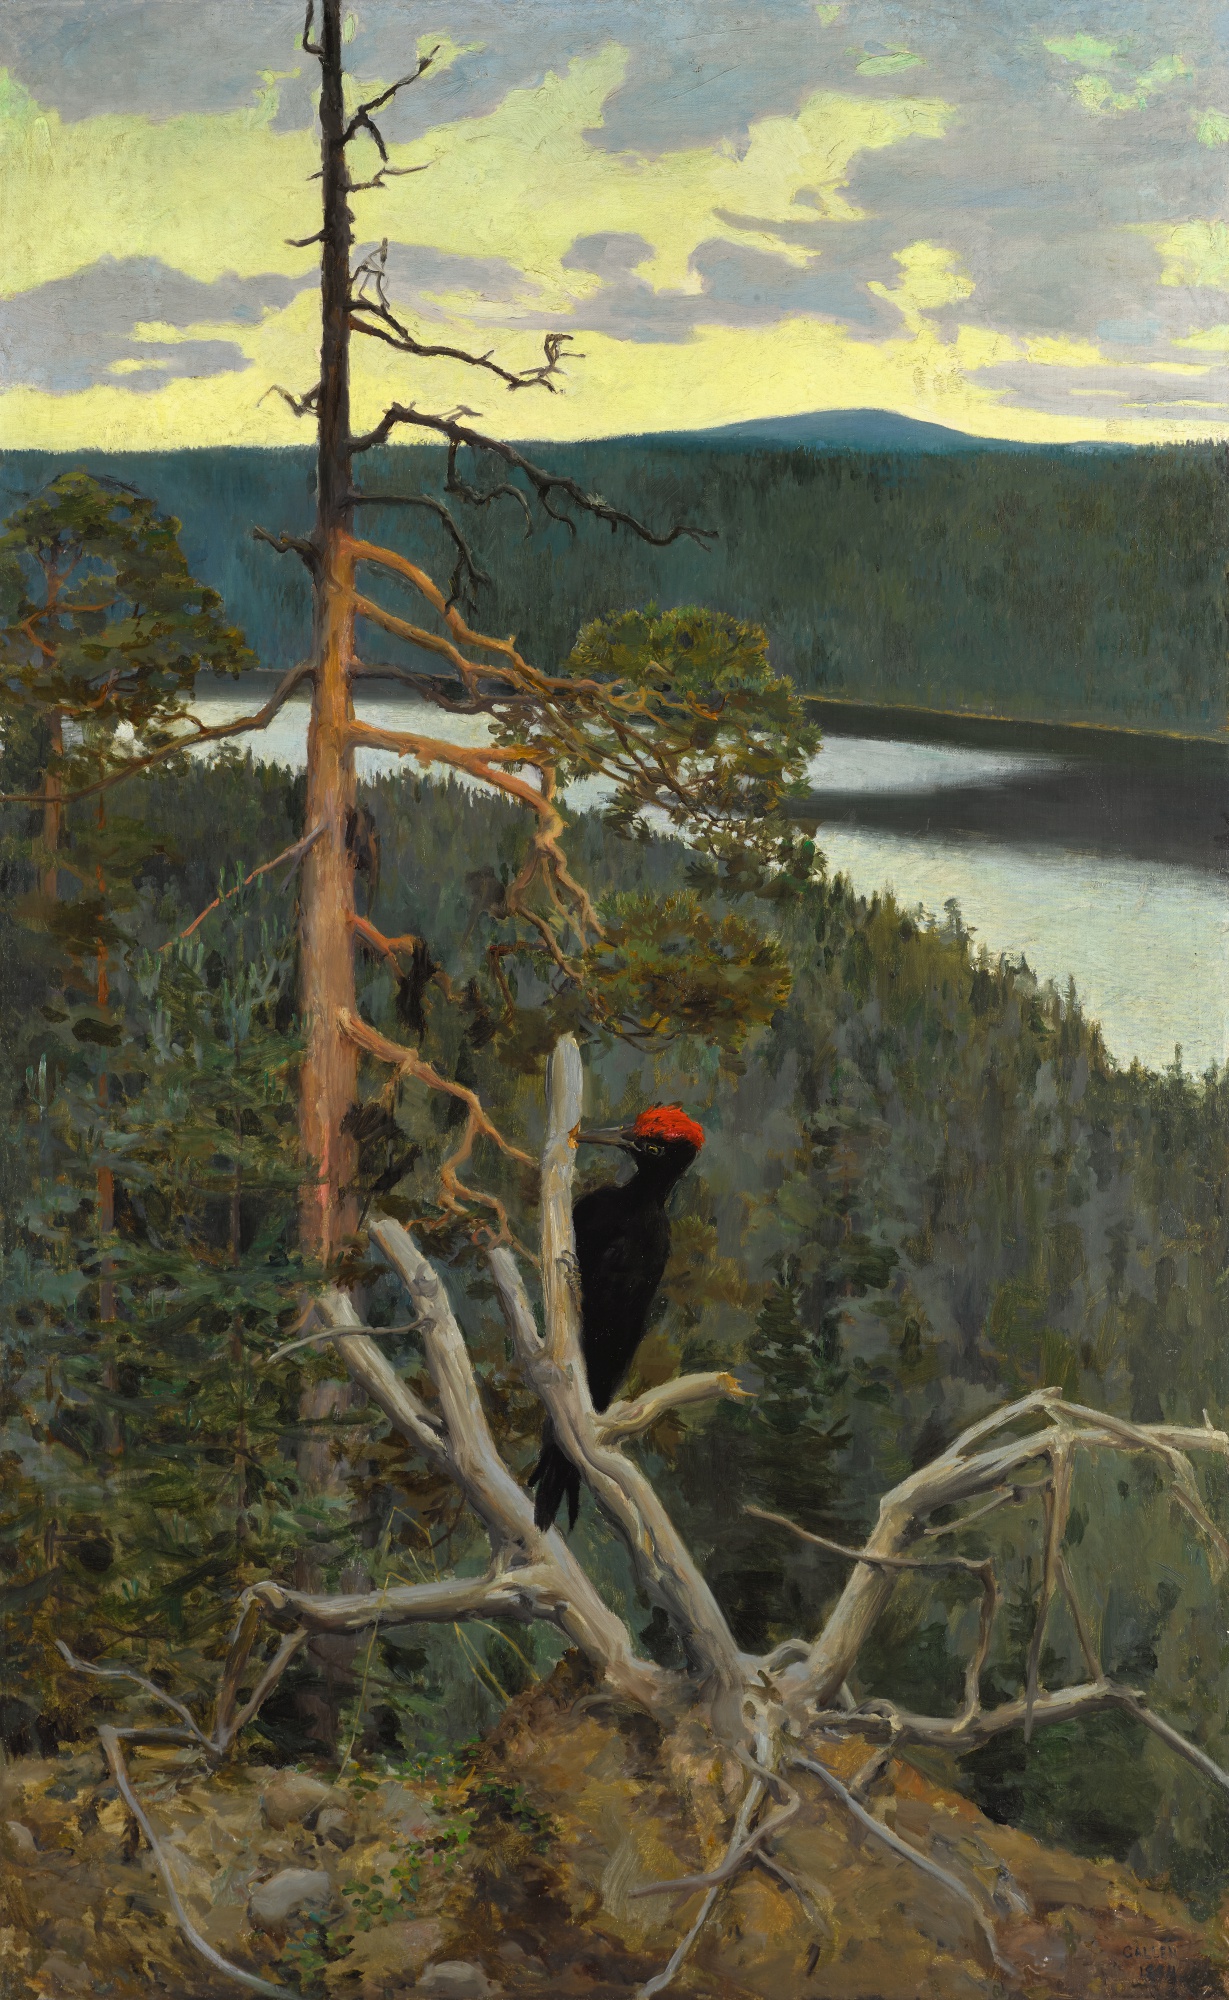 Palokärki (Black Woodpecker) by Akseli Gallen-Kallela - 1894 - 145 x 91 cm private collection